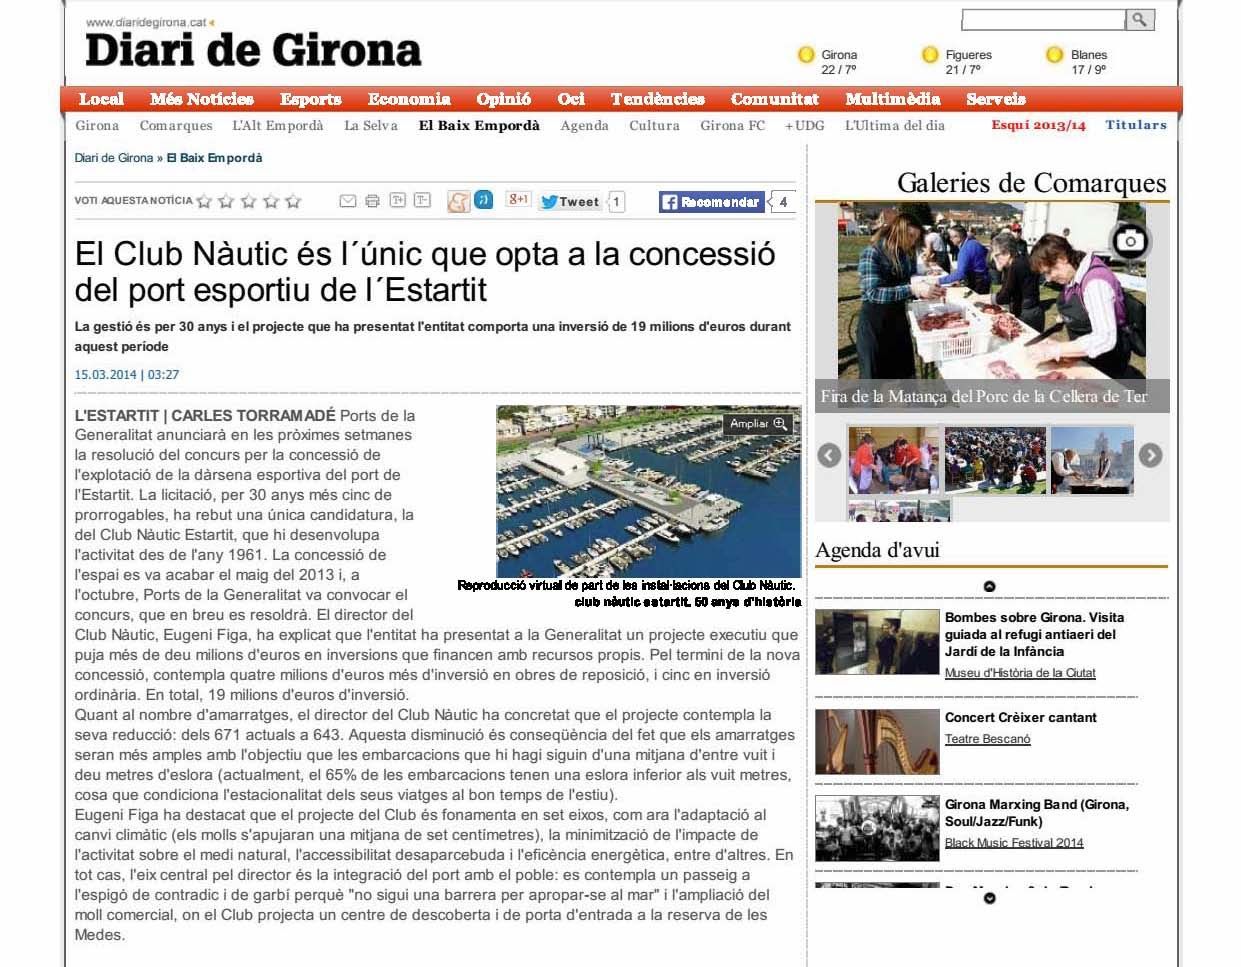 Diari de Gironaok 15-03-14